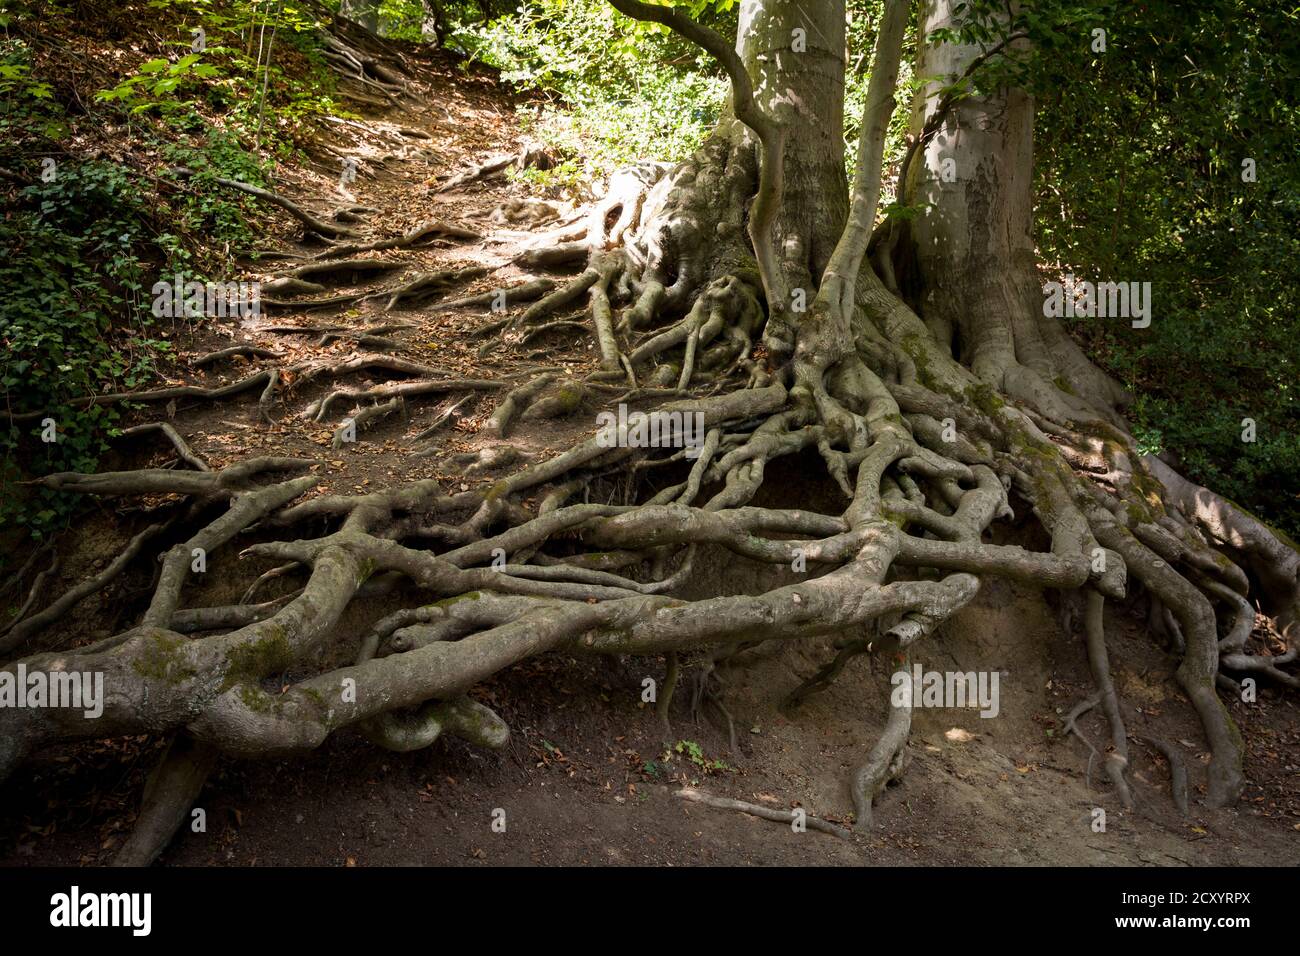 root of a beech tree exposed by erosion in Remagen-Rolandswerth, Rhineland-Palatinate, Germany.  durch Erosion freigelegte Wurzel einer Buche in Remag Stock Photo